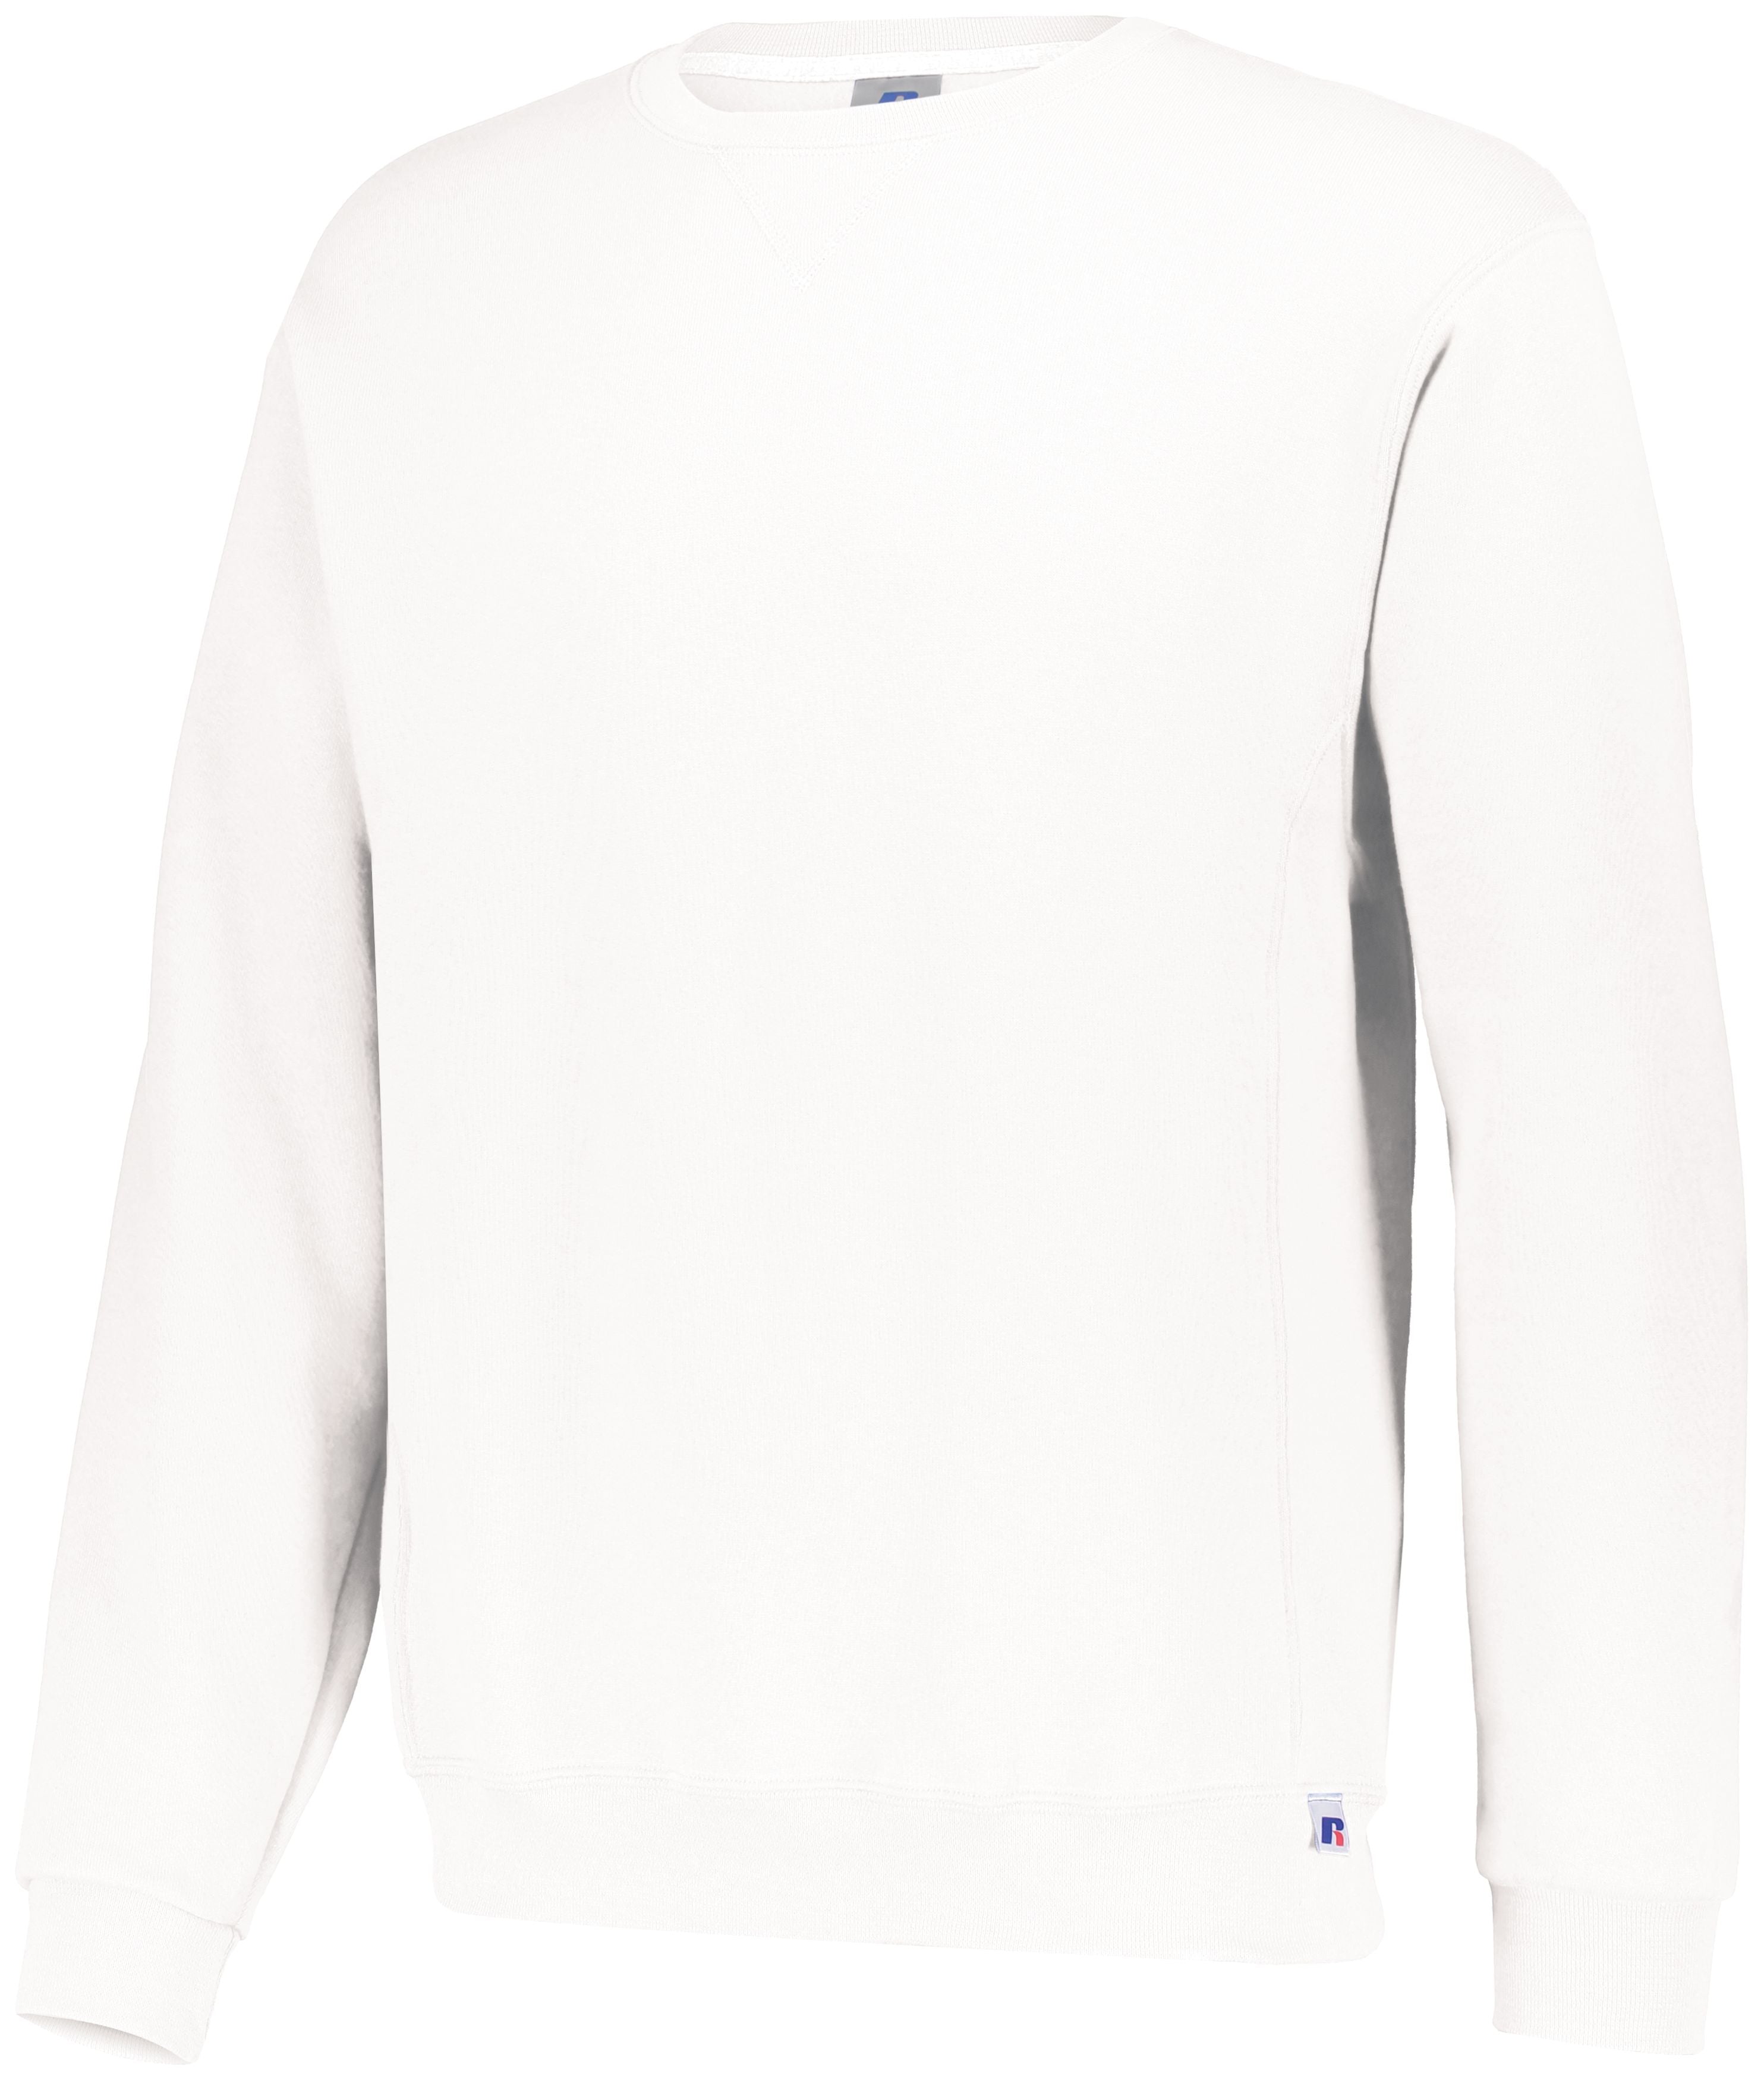 Russell Athletic Dri-Power  Fleece Crew Sweatshirt in White  -Part of the Adult, Adult-Sweatshirt, Russell-Athletic-Products, Outerwear product lines at KanaleyCreations.com